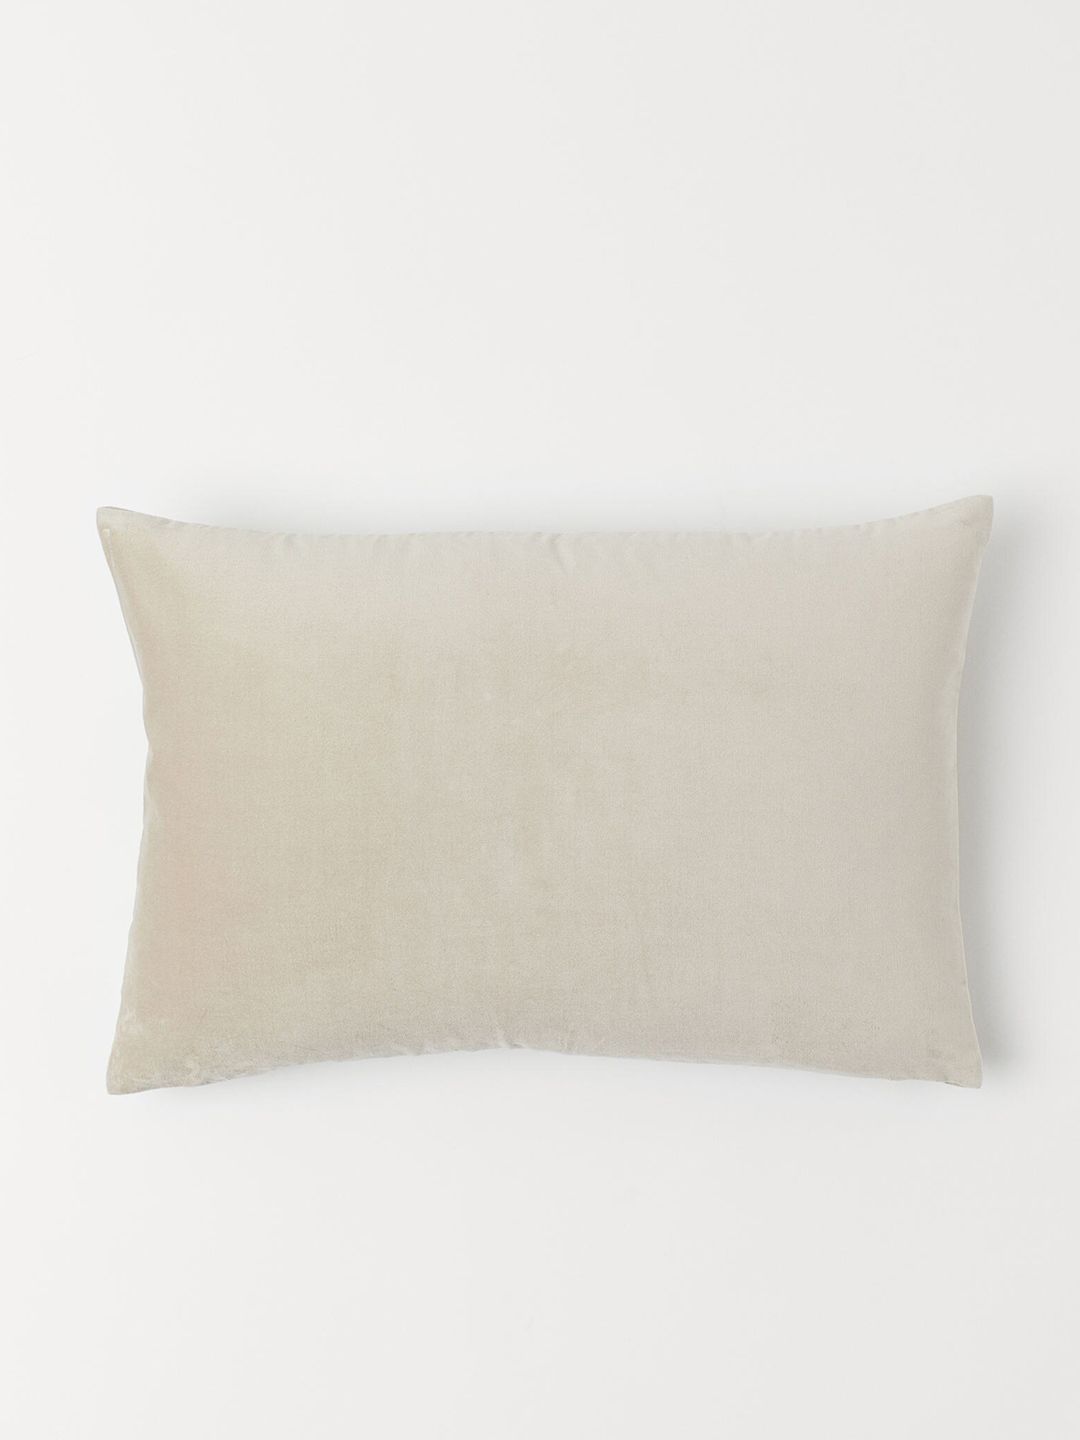 H&M Beige Cotton Velvet Cushion Cover Price in India